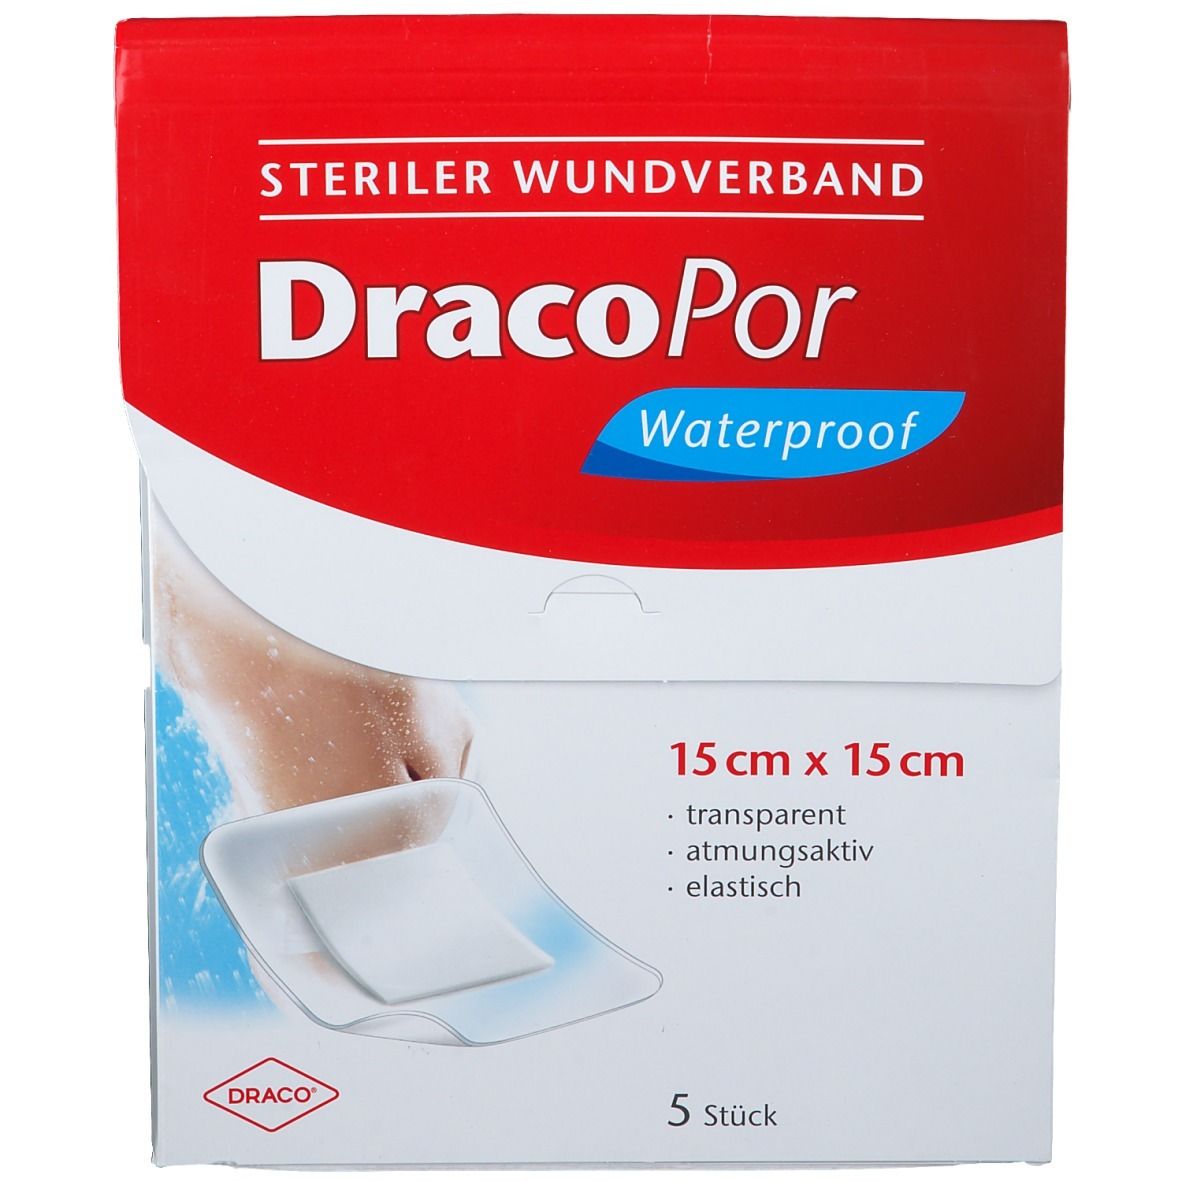 Dracopor Waterproof 15 cm x 15 cm steril